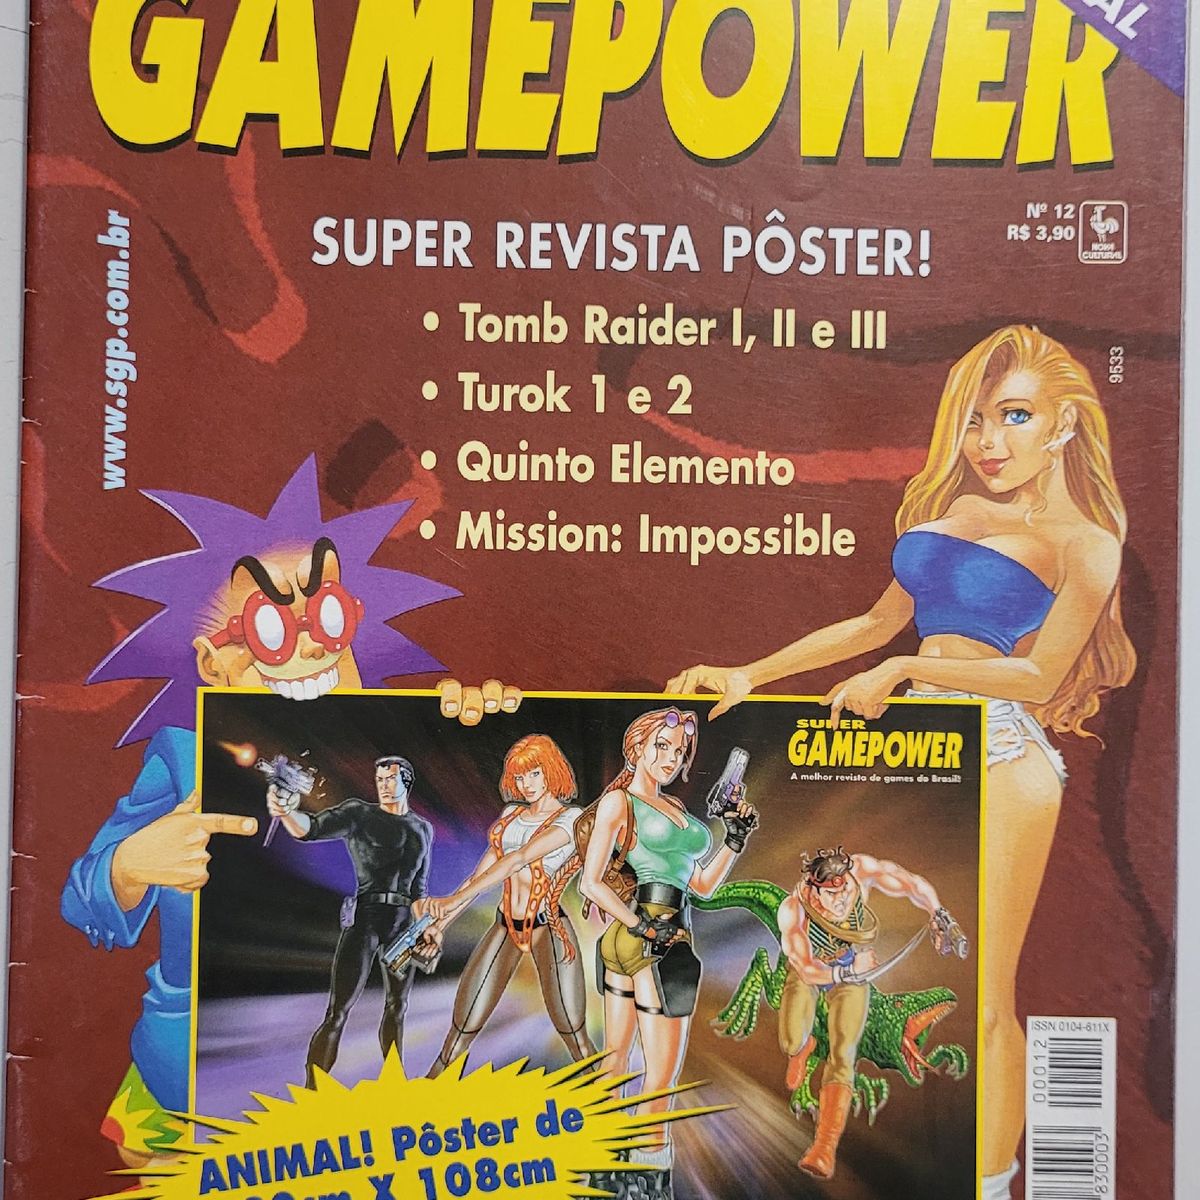 Super GamePower Nº 51